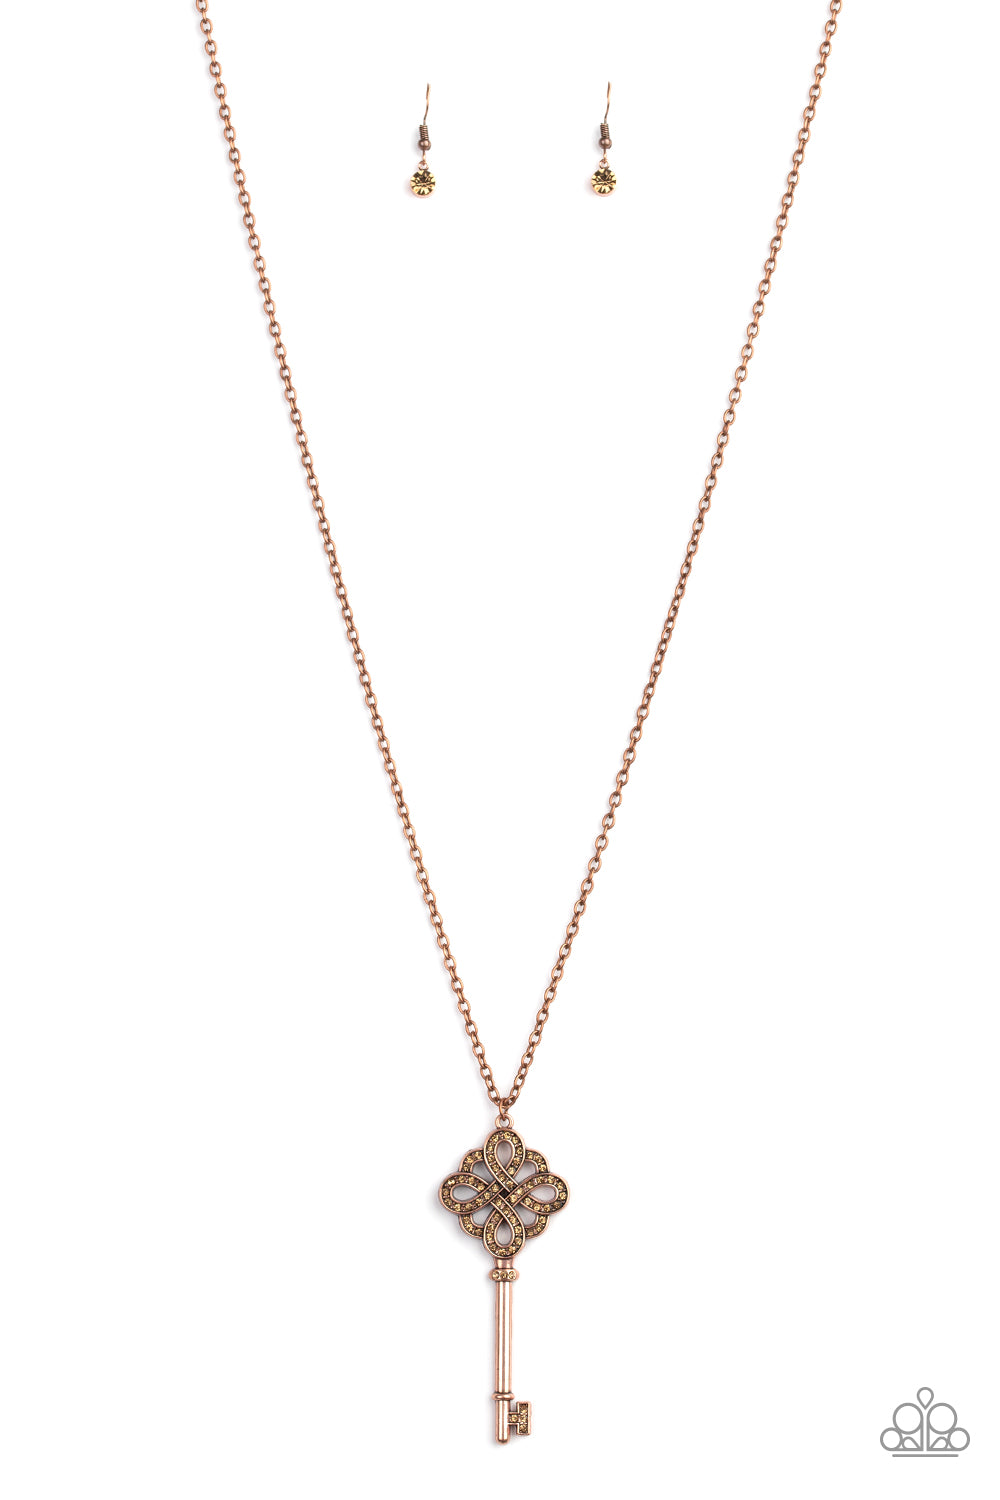 Unlocked - copper - Paparazzi necklace